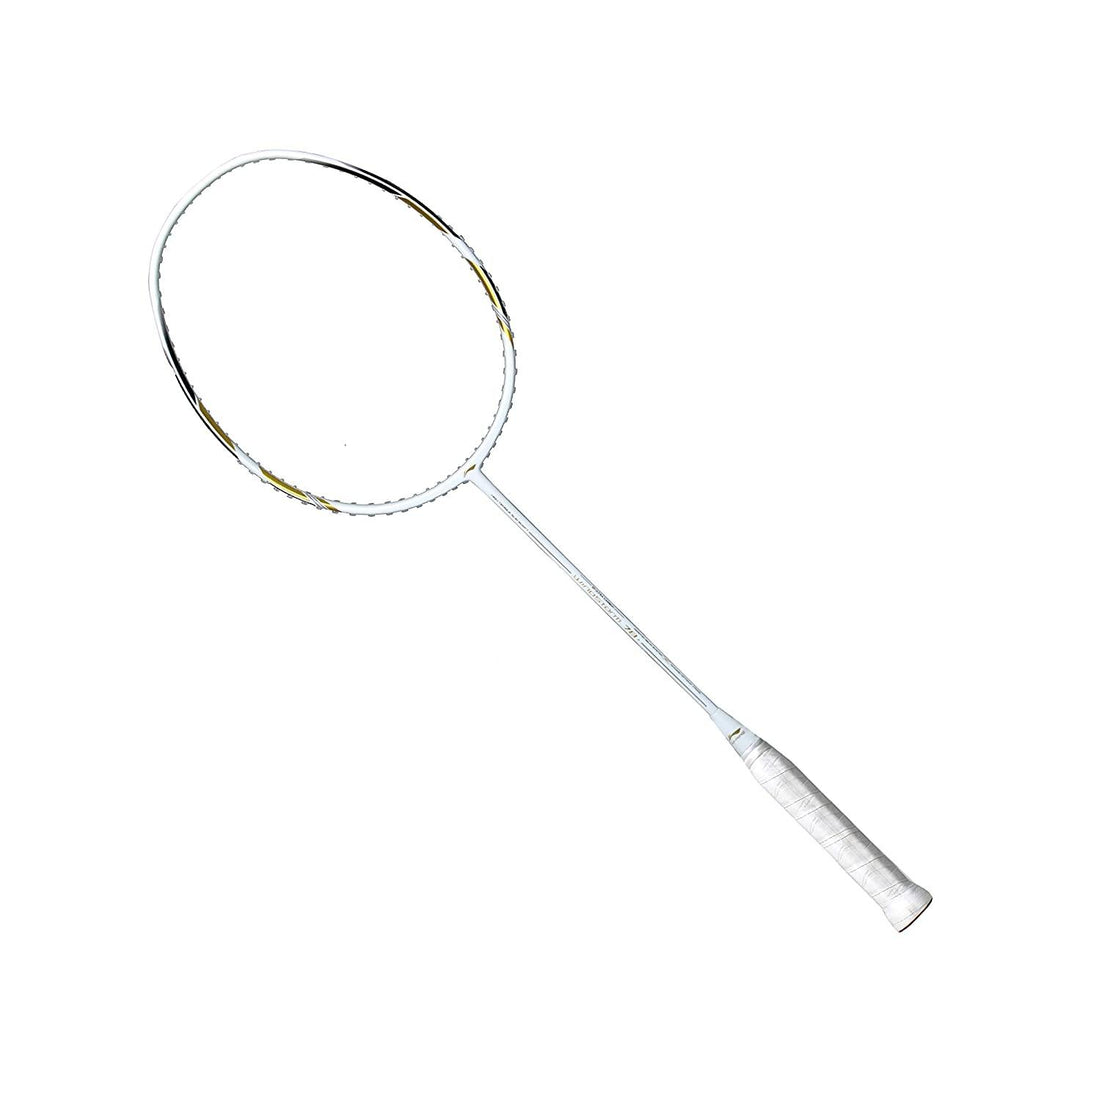 Li-Ning Windstorm 78 Plus Badminton Racquet - Best Price online Prokicksports.com